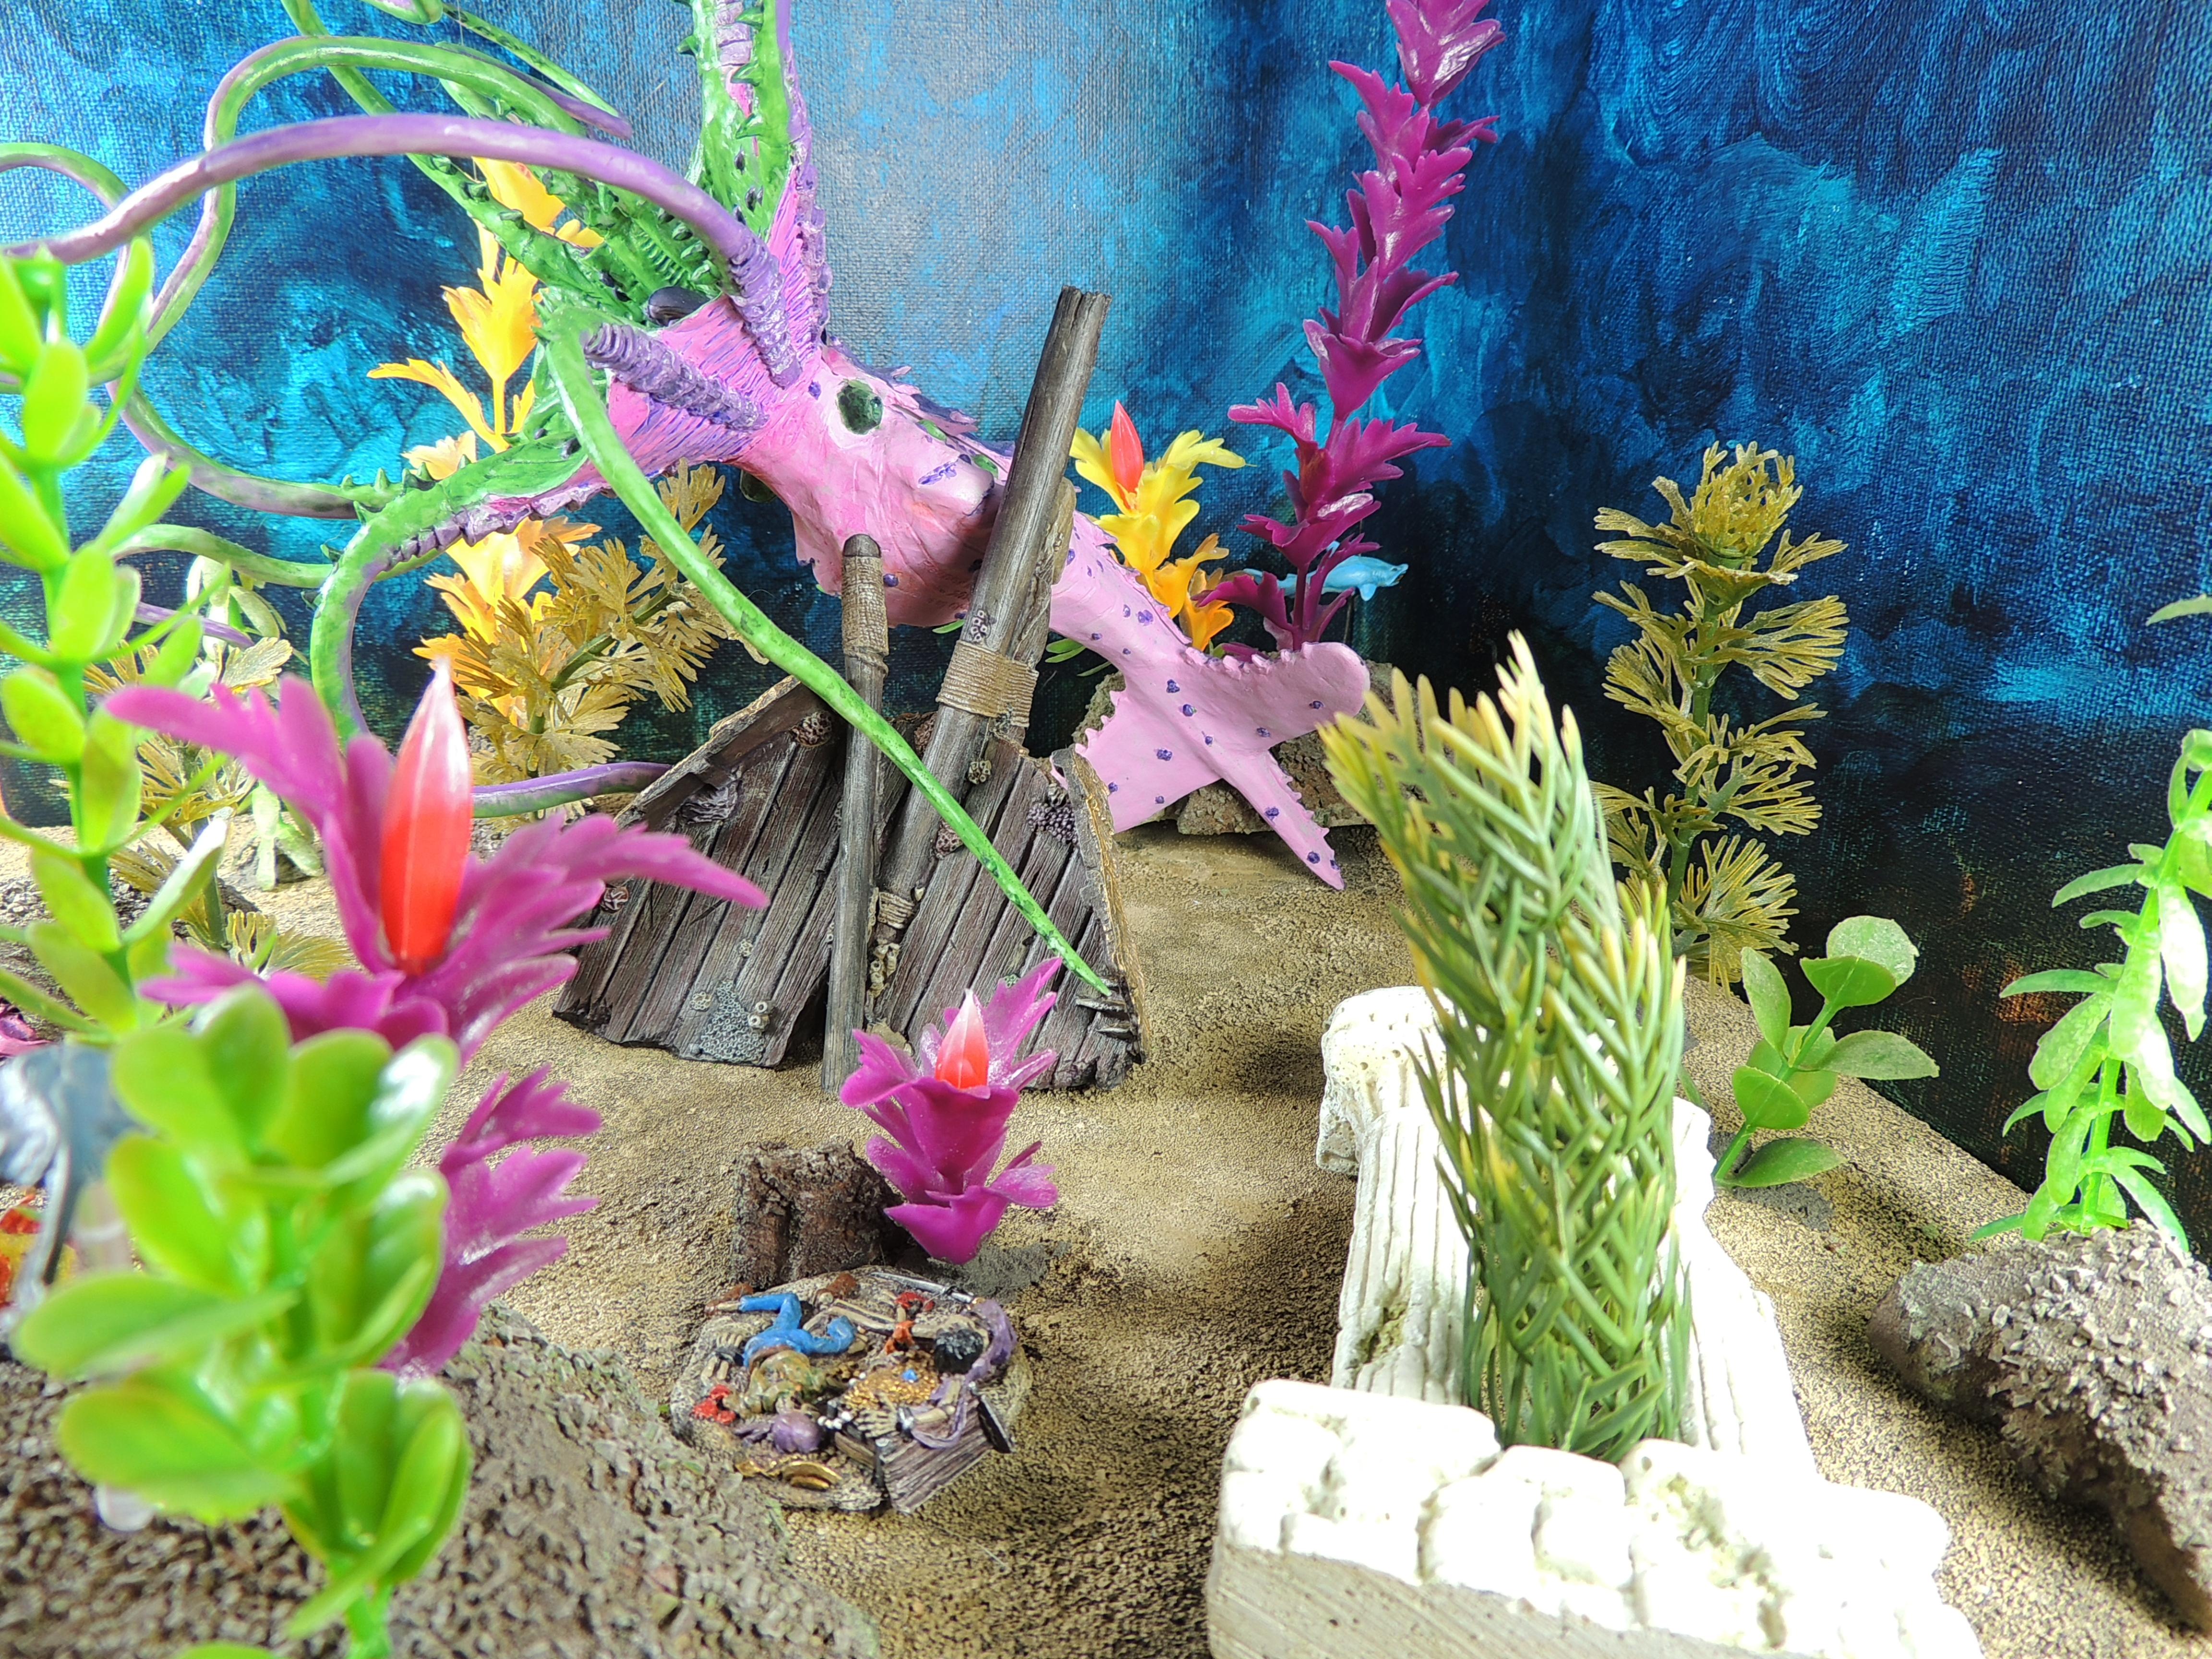 Kraken Diorama - Kraken Diorama - Gallery - DakkaDakka